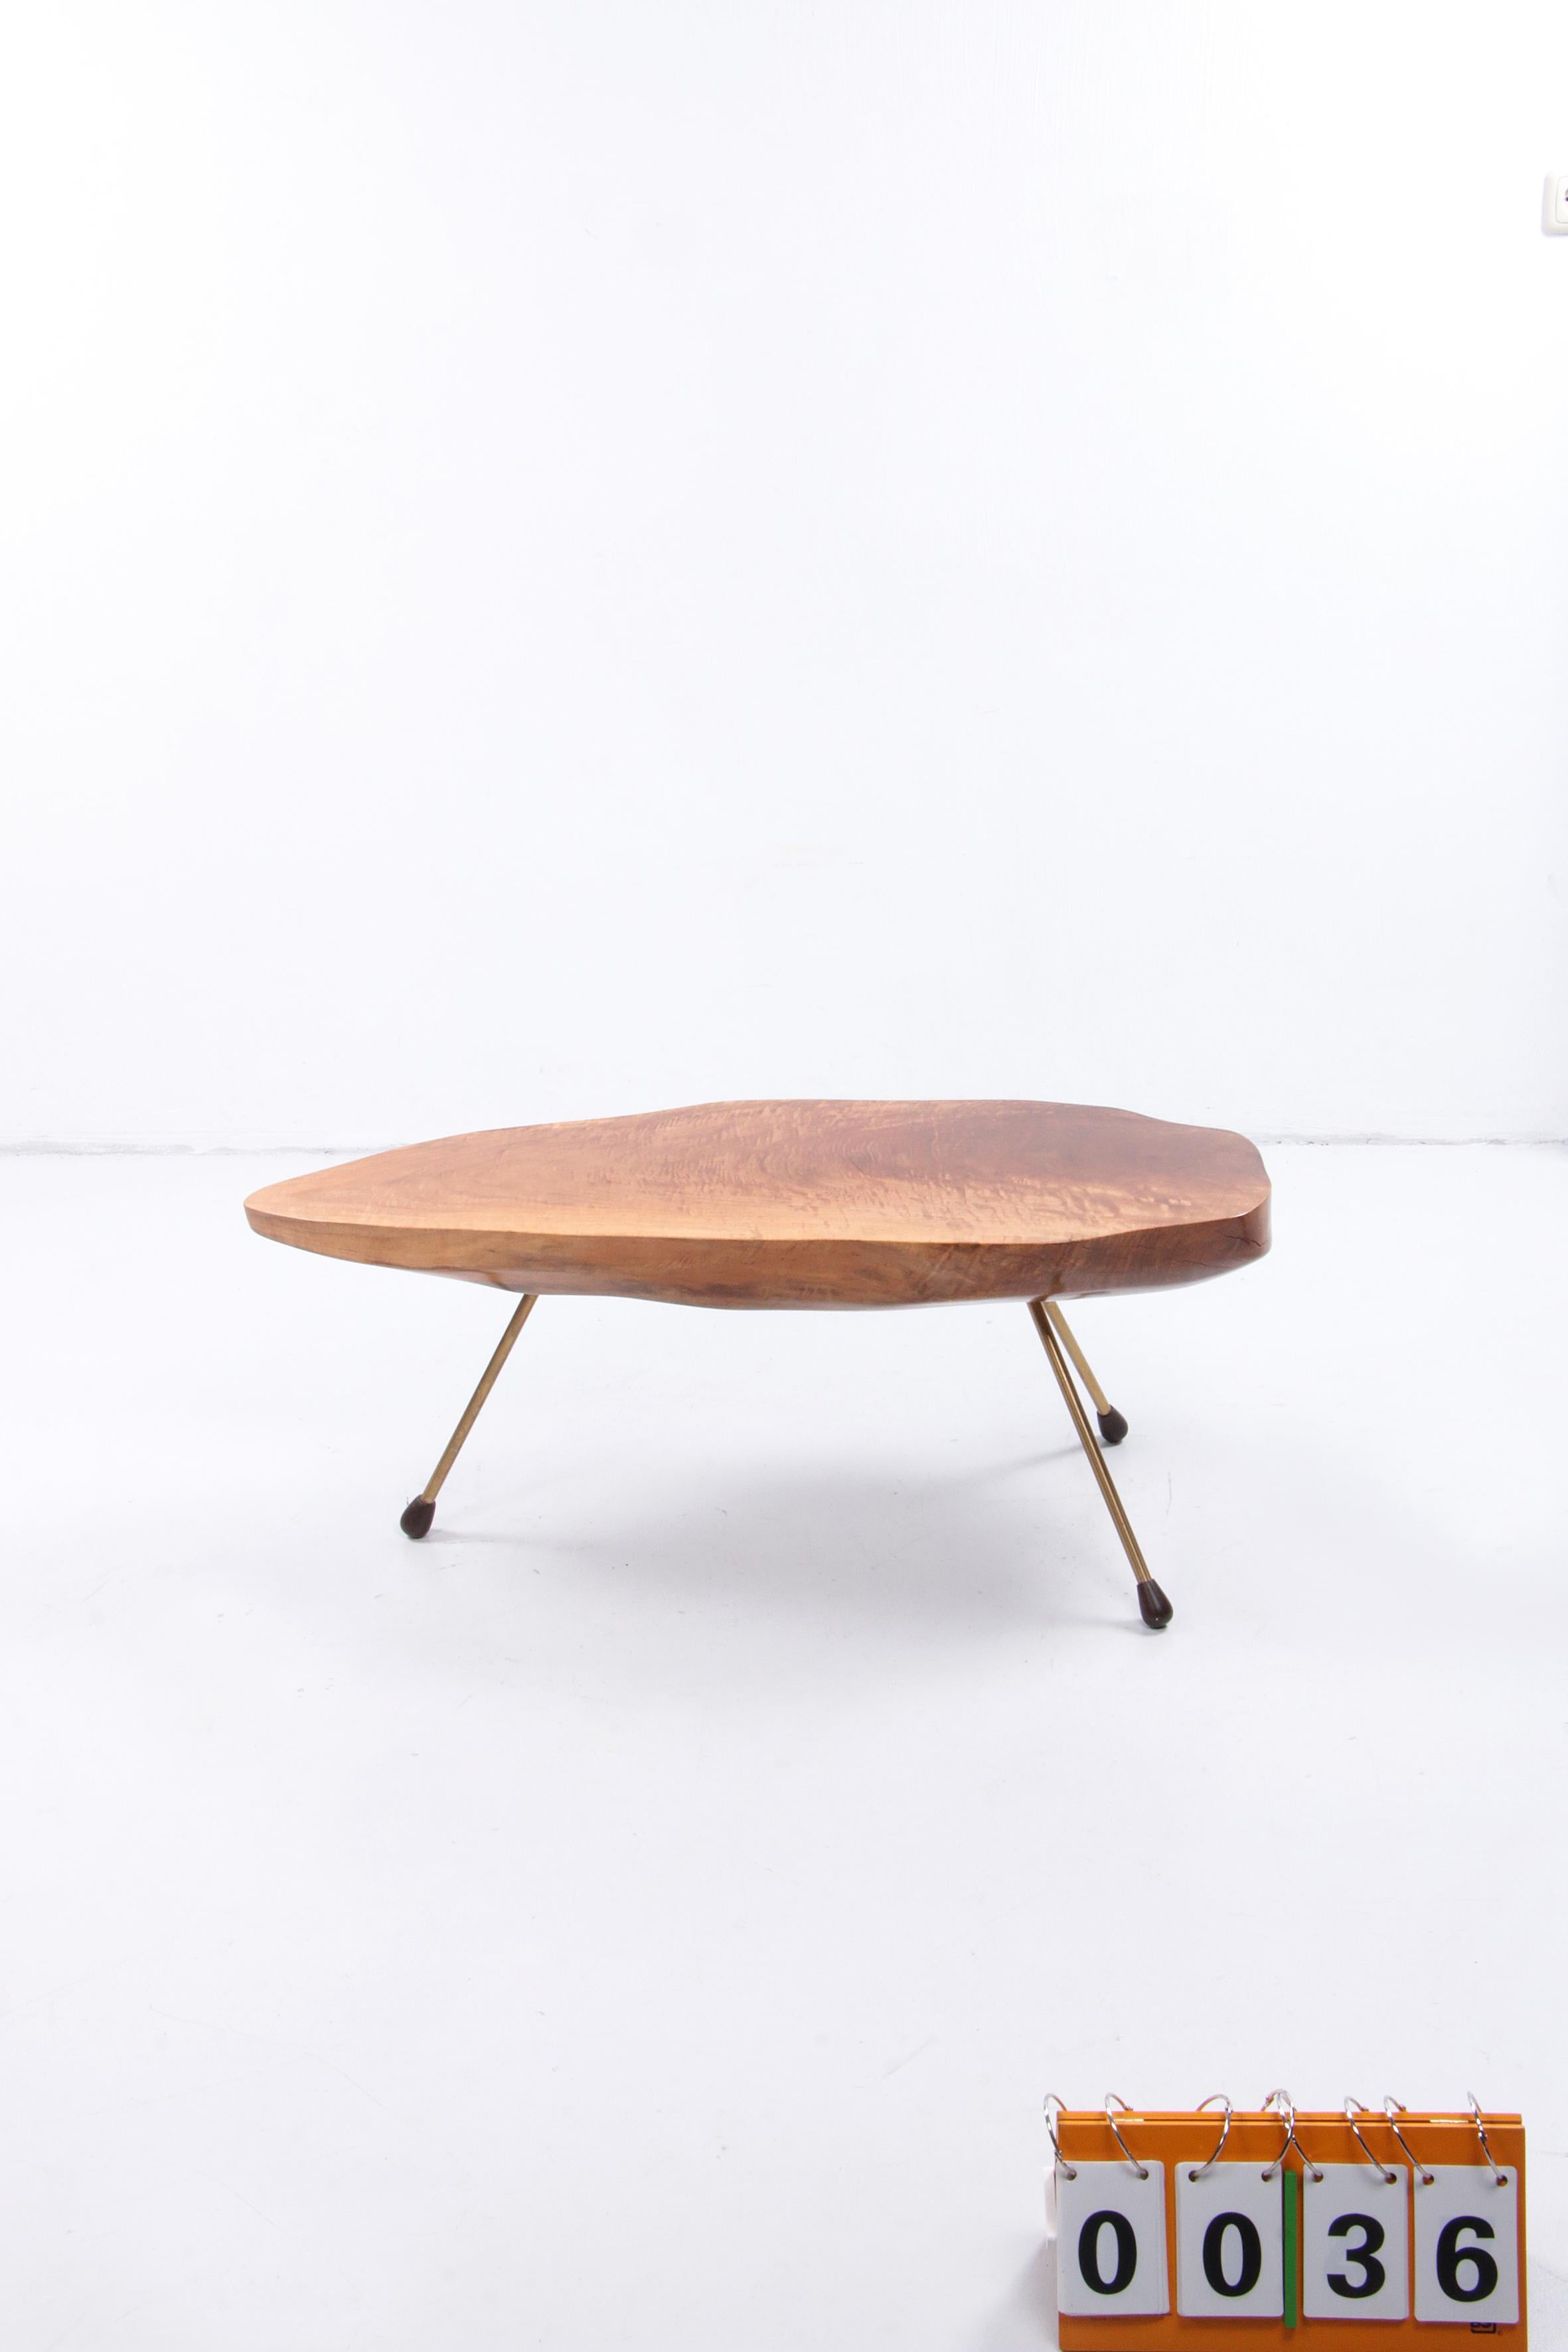 Mid-Century Modern Design Coffee Table Walnut with Copper Legs, 1950s Austria